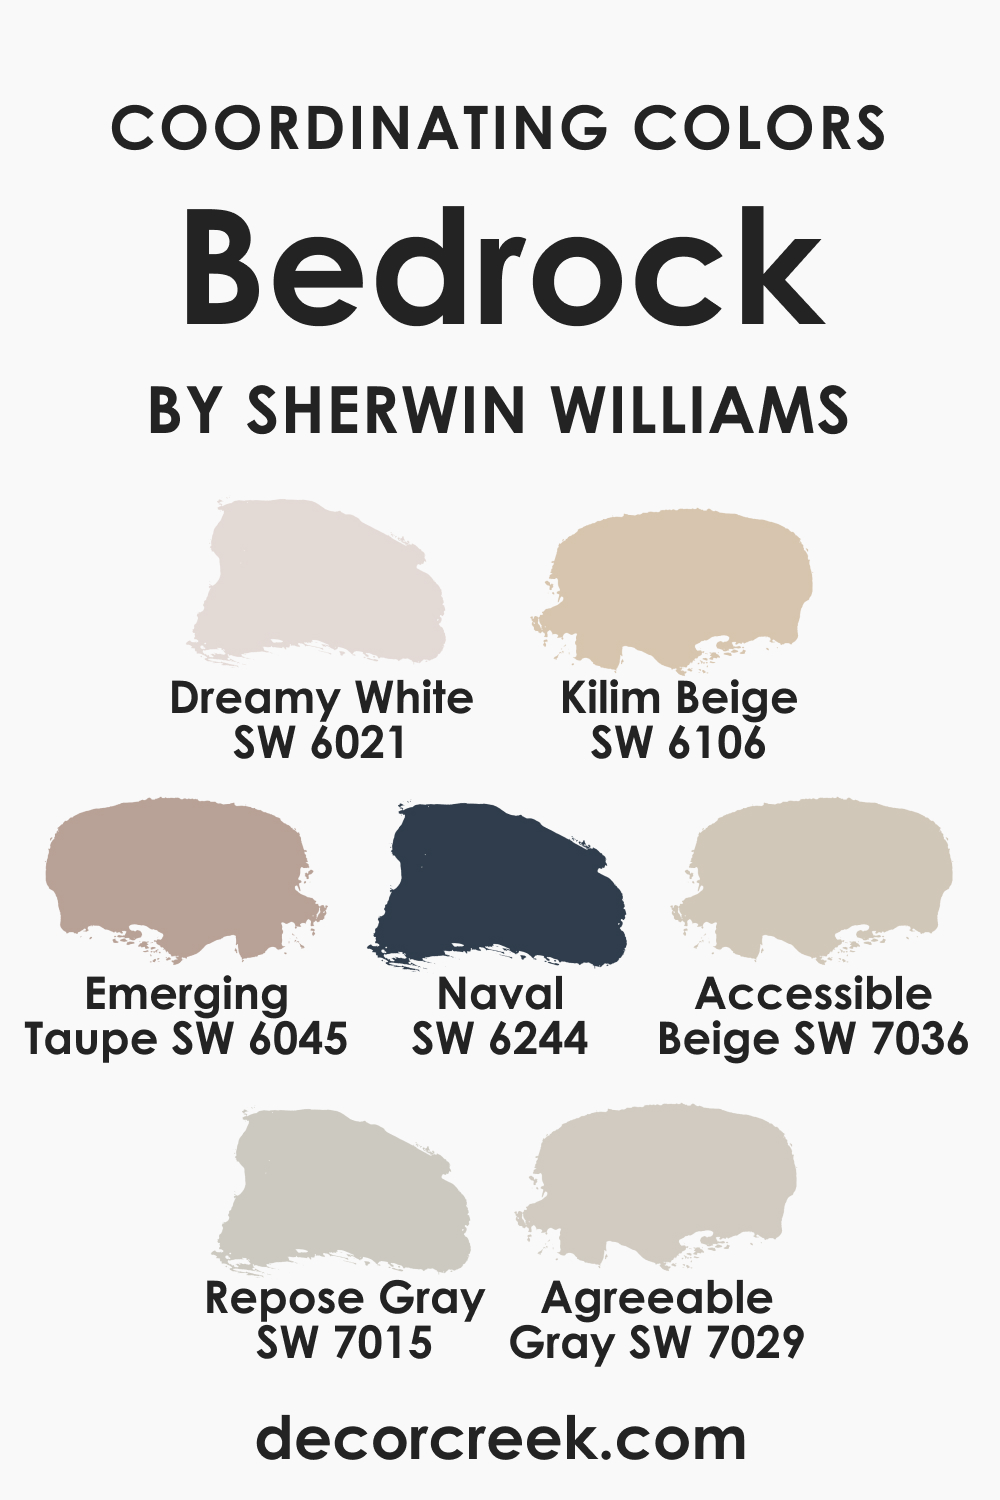 Coordinating Colors of SW 9563 Bedrock